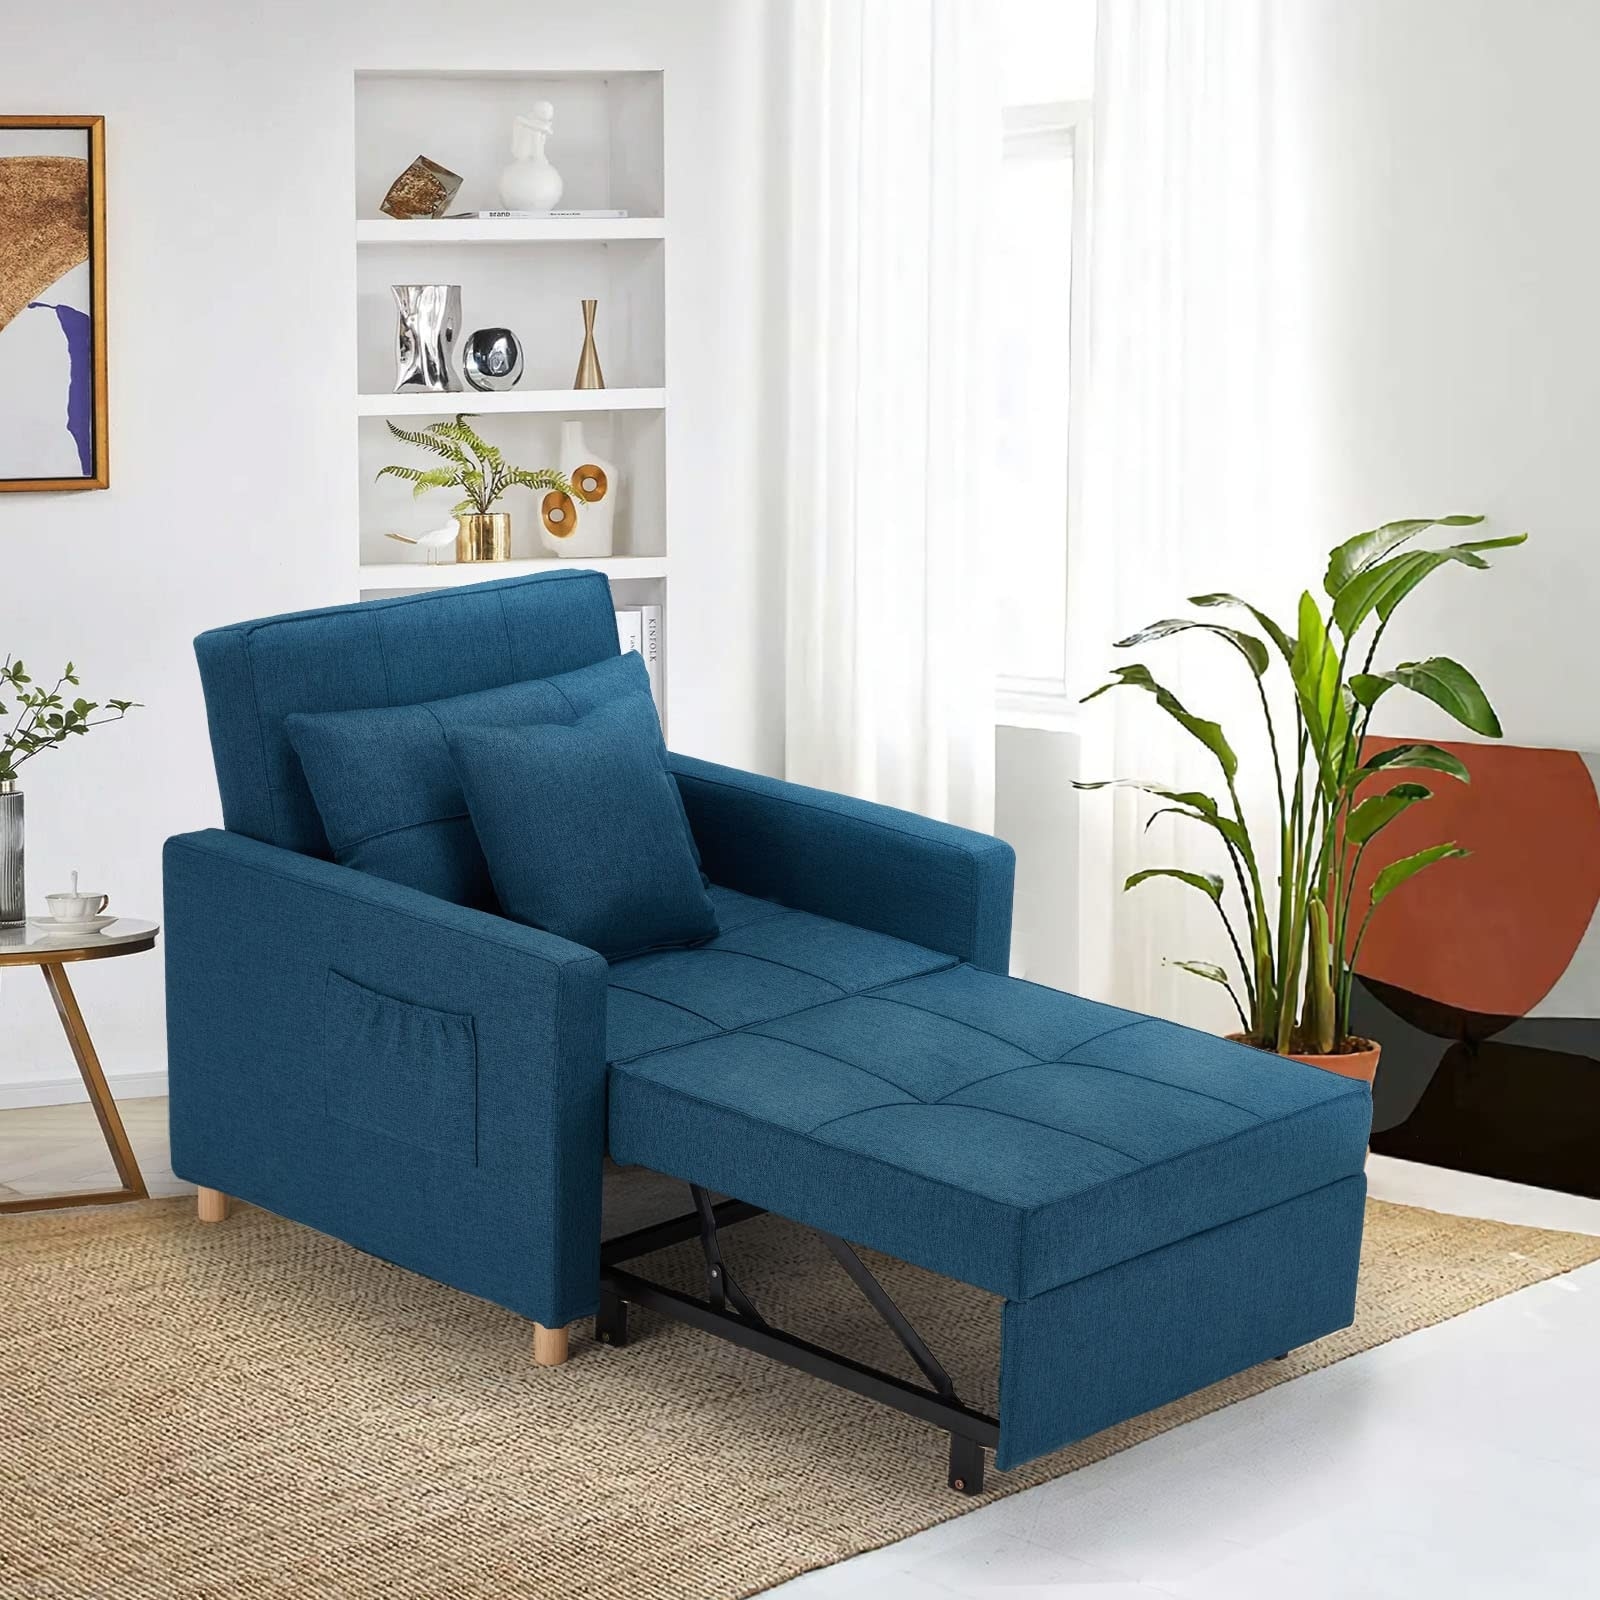 YODOLLA 3-in-1 Futon Sofa Bed Chair,Convertible Sofa Sleeper-Dark